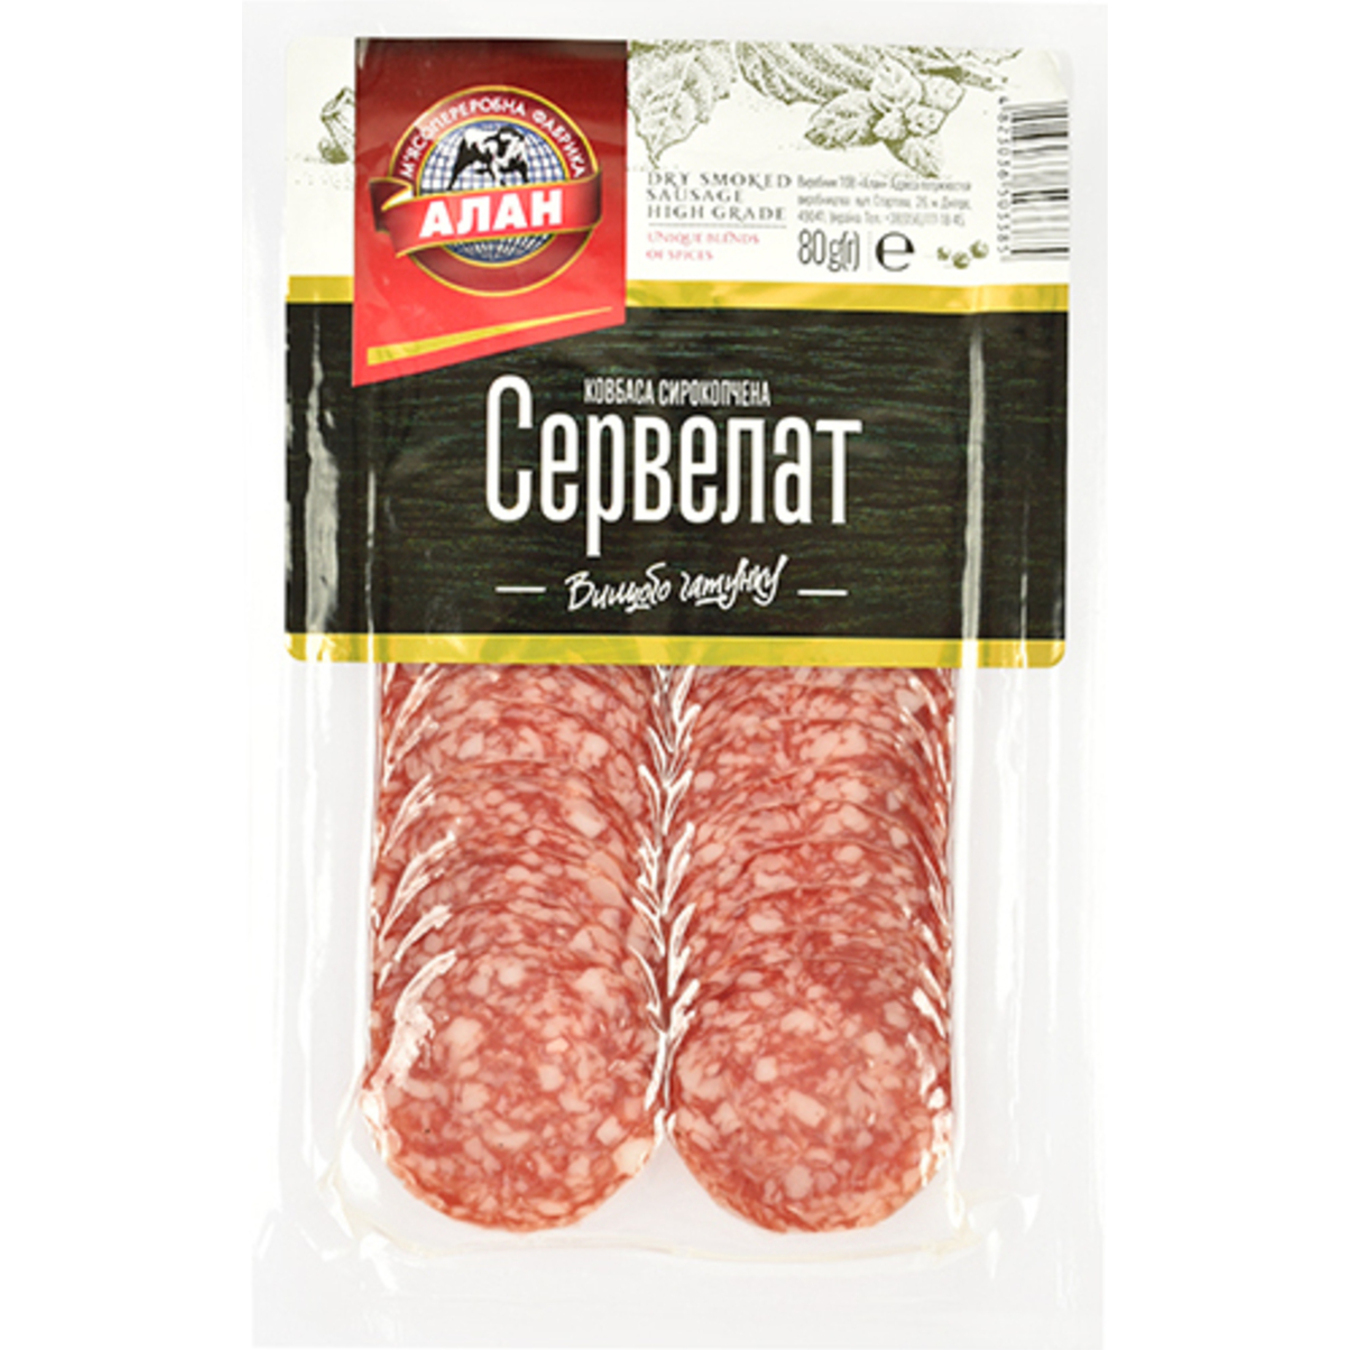 Alan Cervelat Sliced Dry Smoked Sausage High Grade 80g